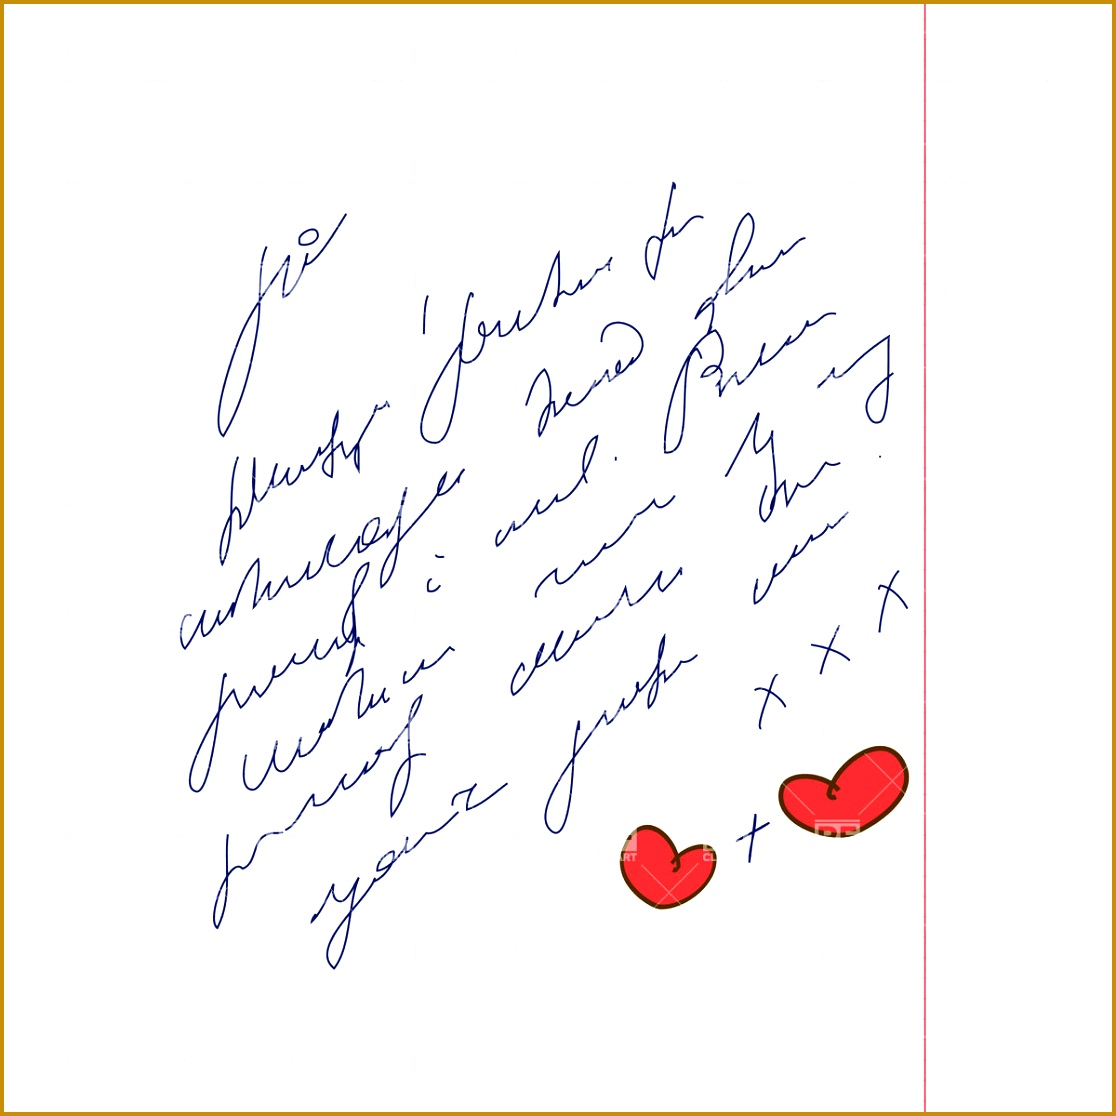 Love letter handwritten text on paper sheet Vector Image 11161116